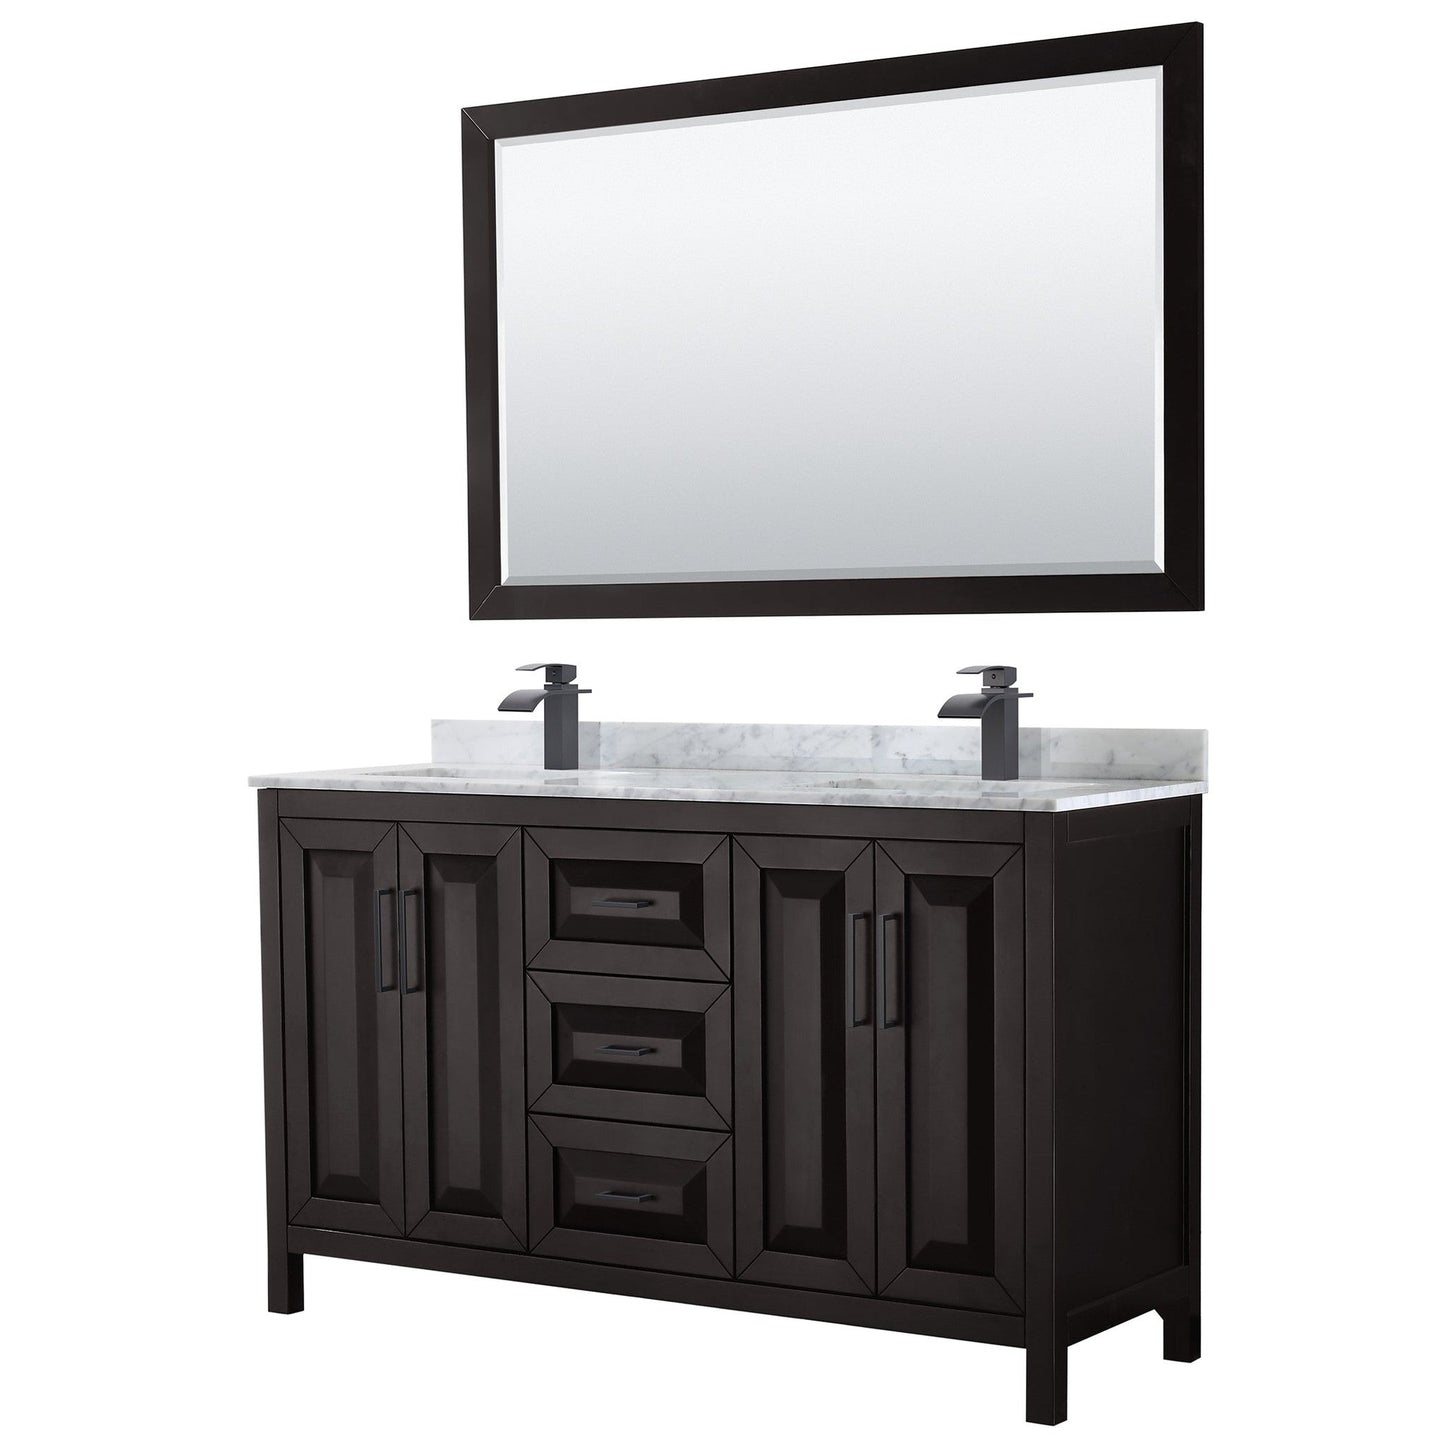 Daria 60" Double Bathroom Vanity in Dark Espresso, White Carrara Marble Countertop, Undermount Square Sinks, Matte Black Trim, 58" Mirror